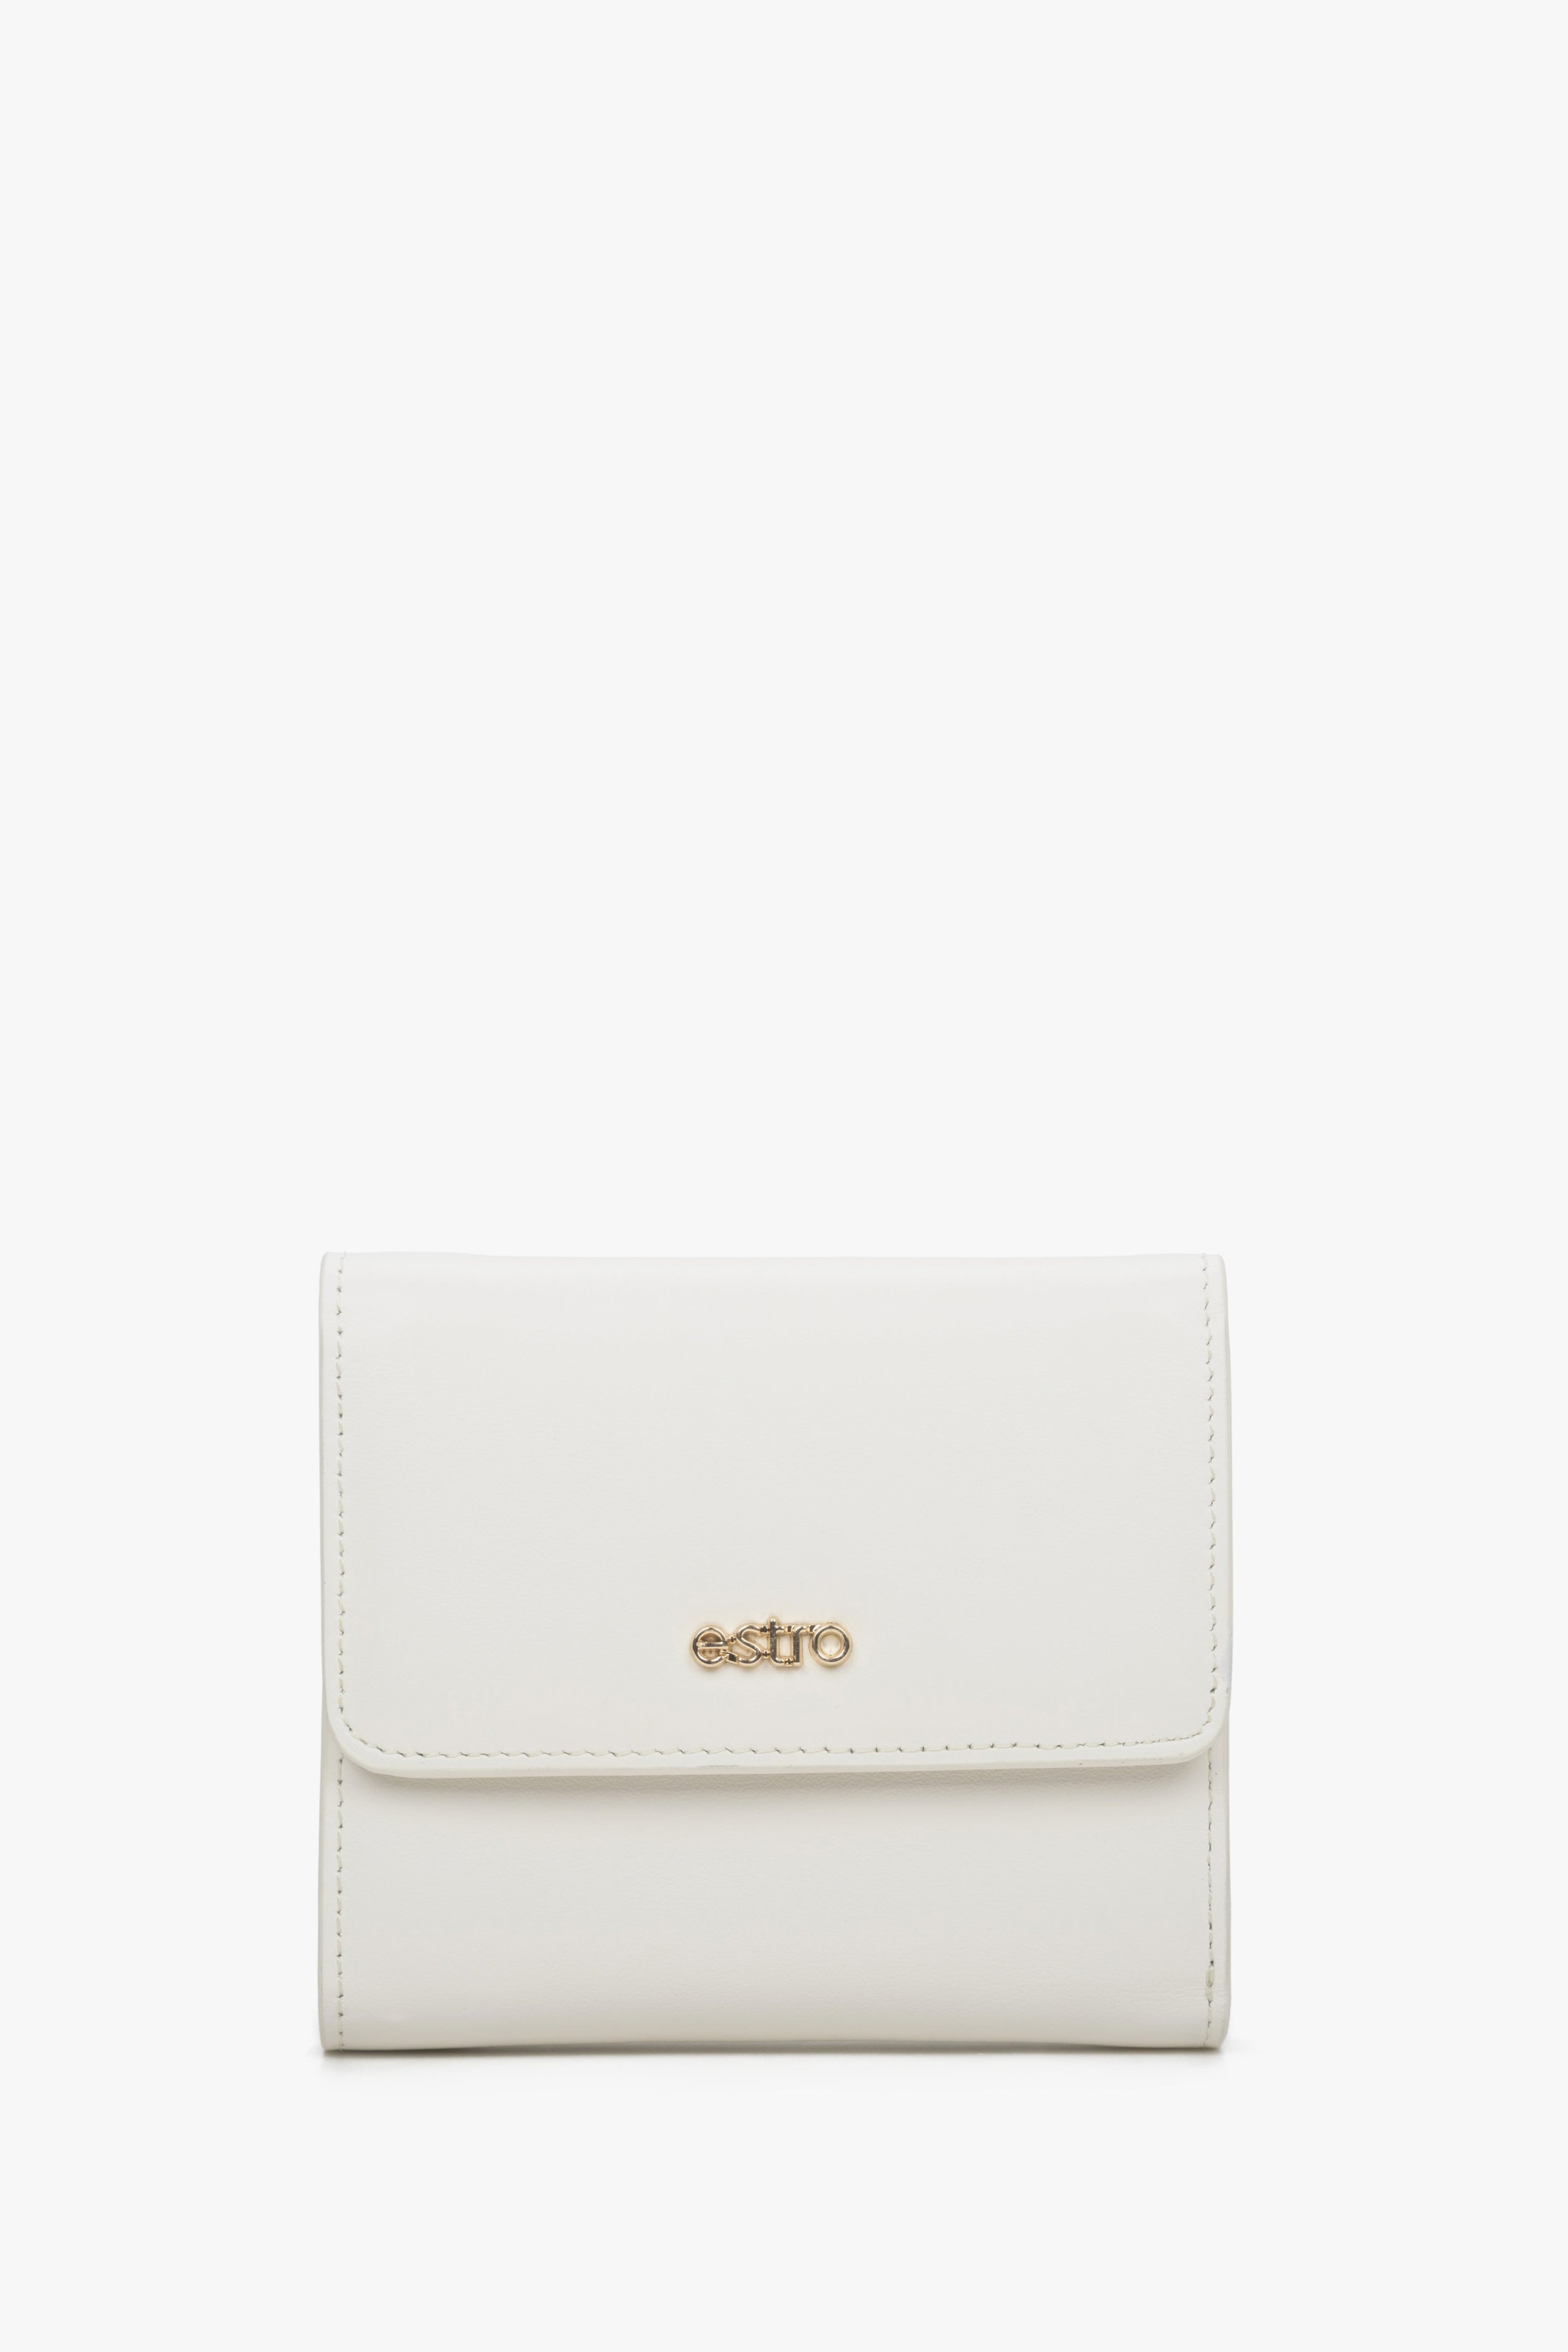 Estro: Mały jasnobeżowy portfel damski ze skóry naturalnej